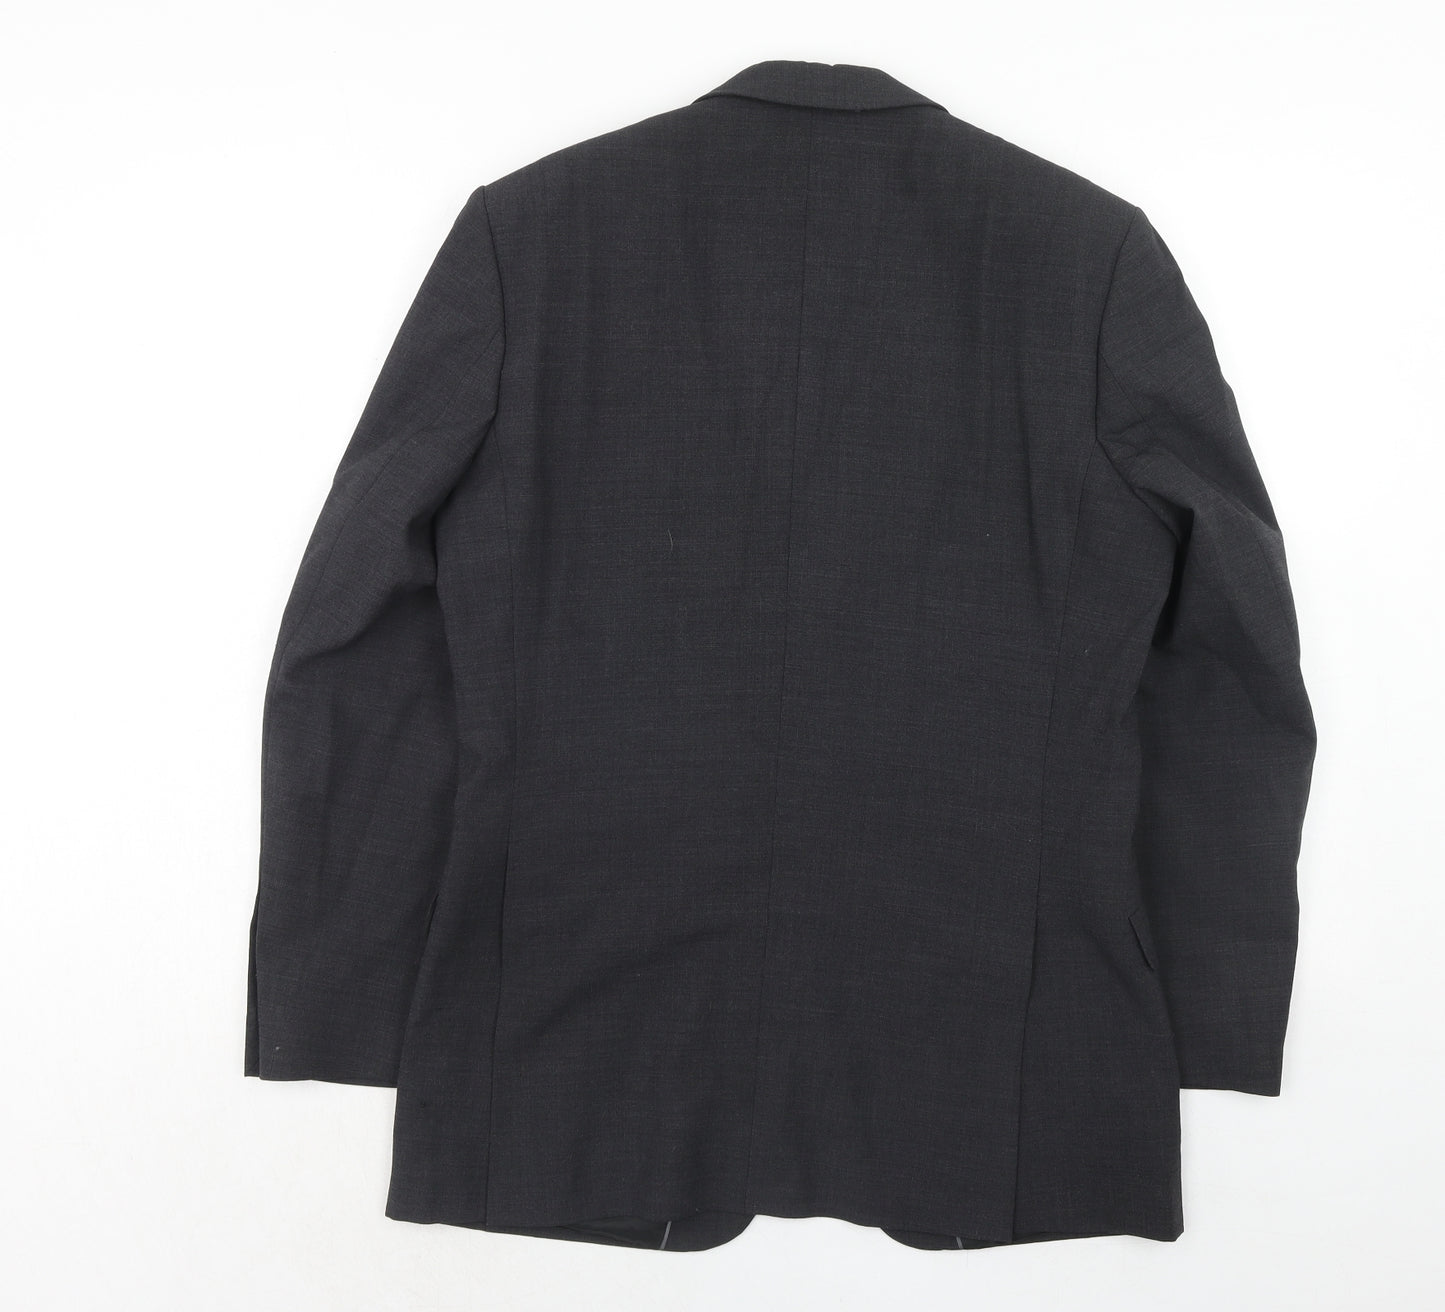 Burton Mens Grey Polyester Jacket Suit Jacket Size 38 Regular